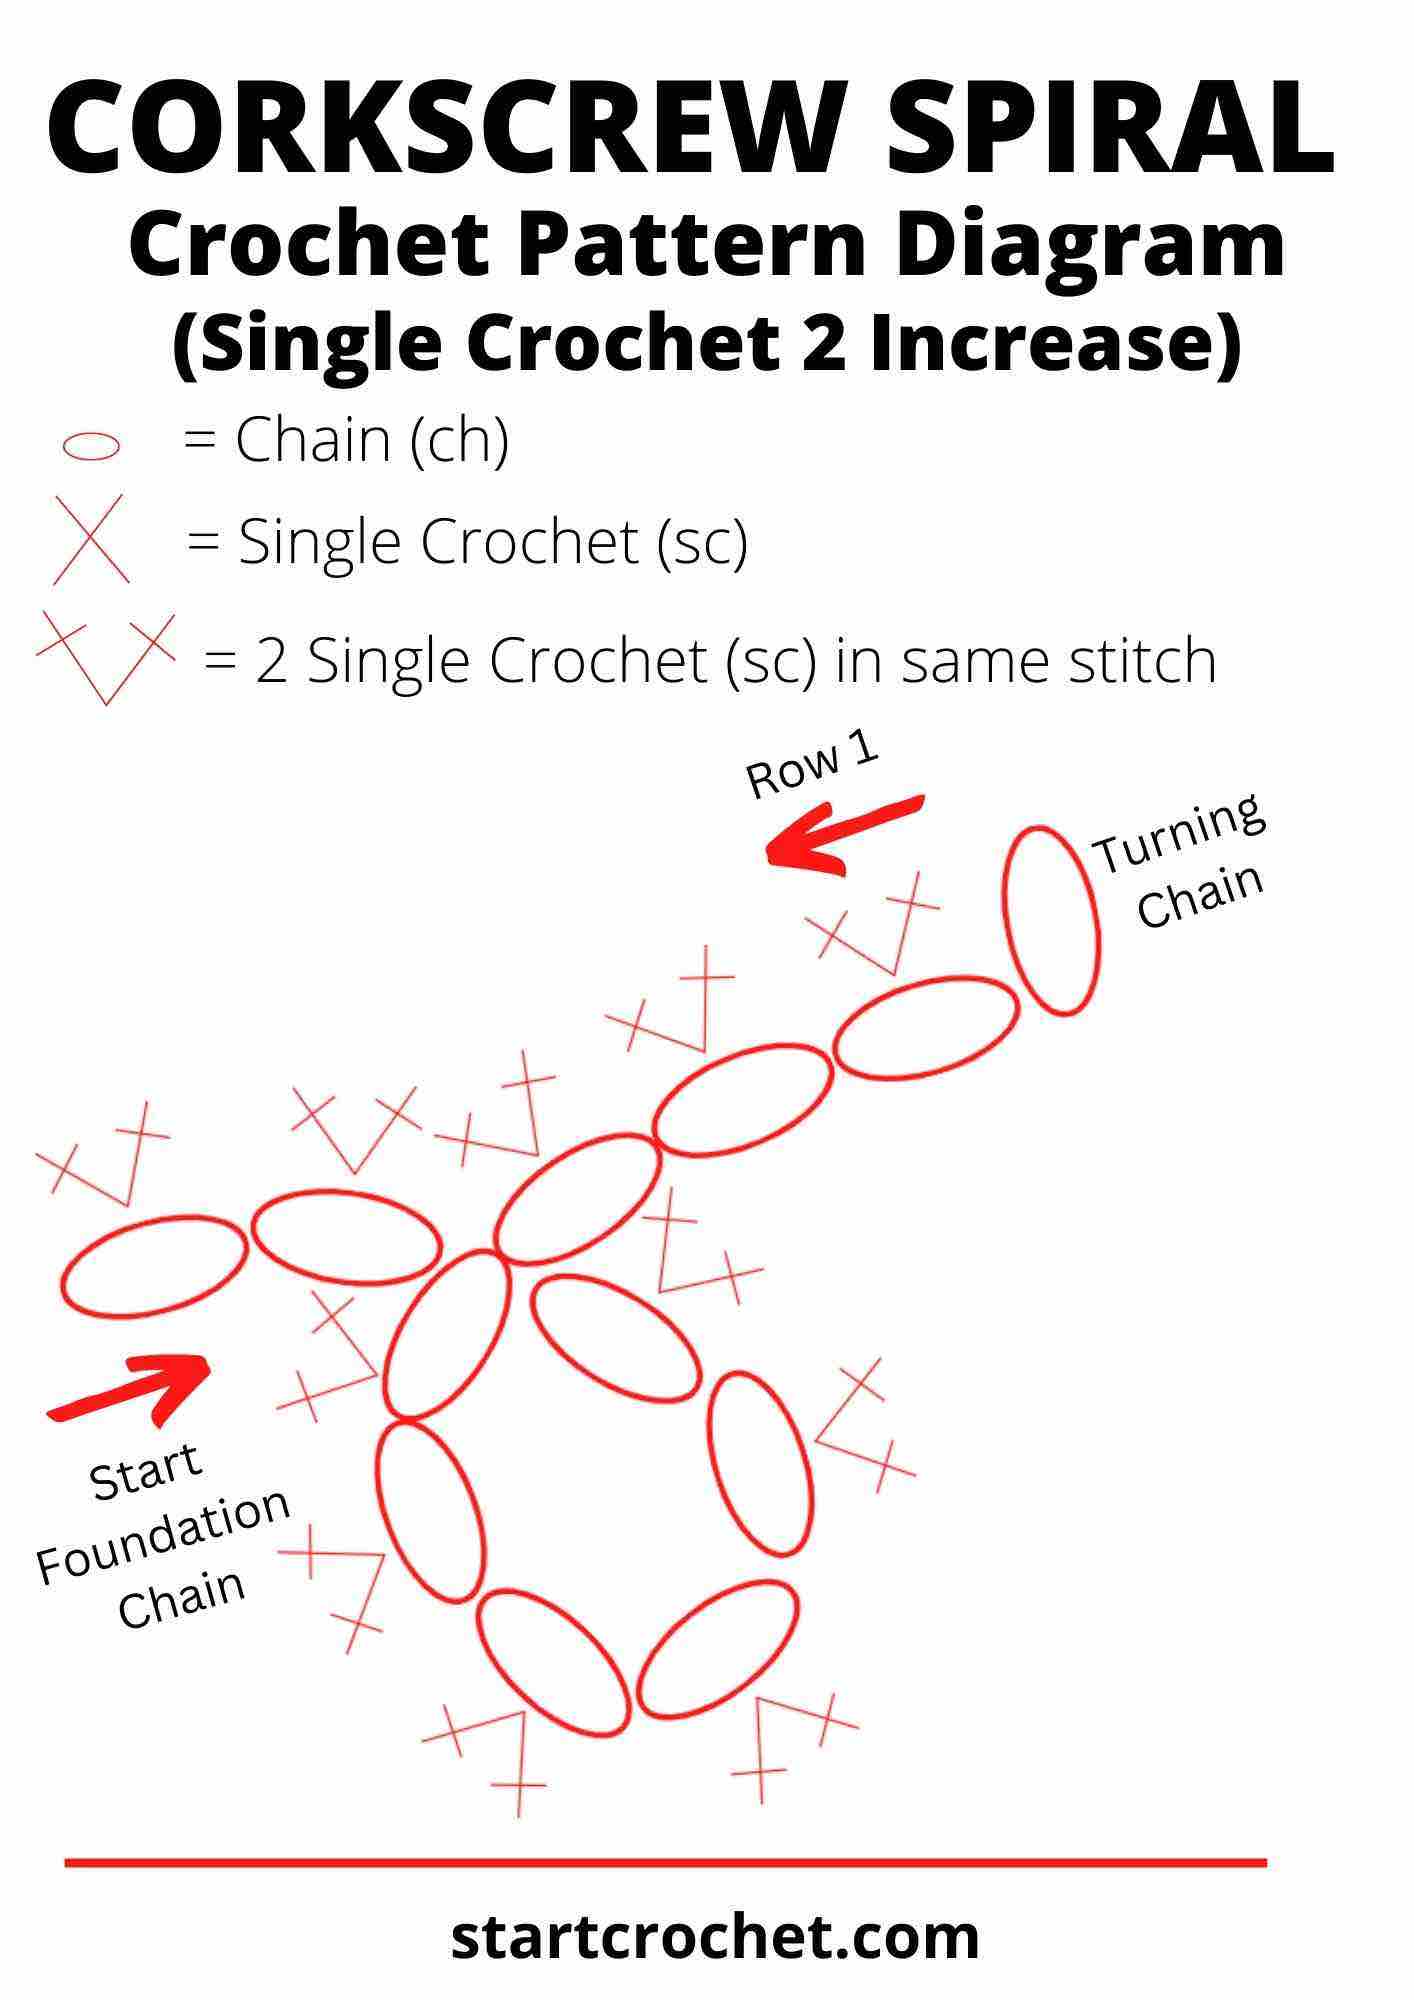 Corkscrew-Spiral-pattern-Diagram-sc-2-increase